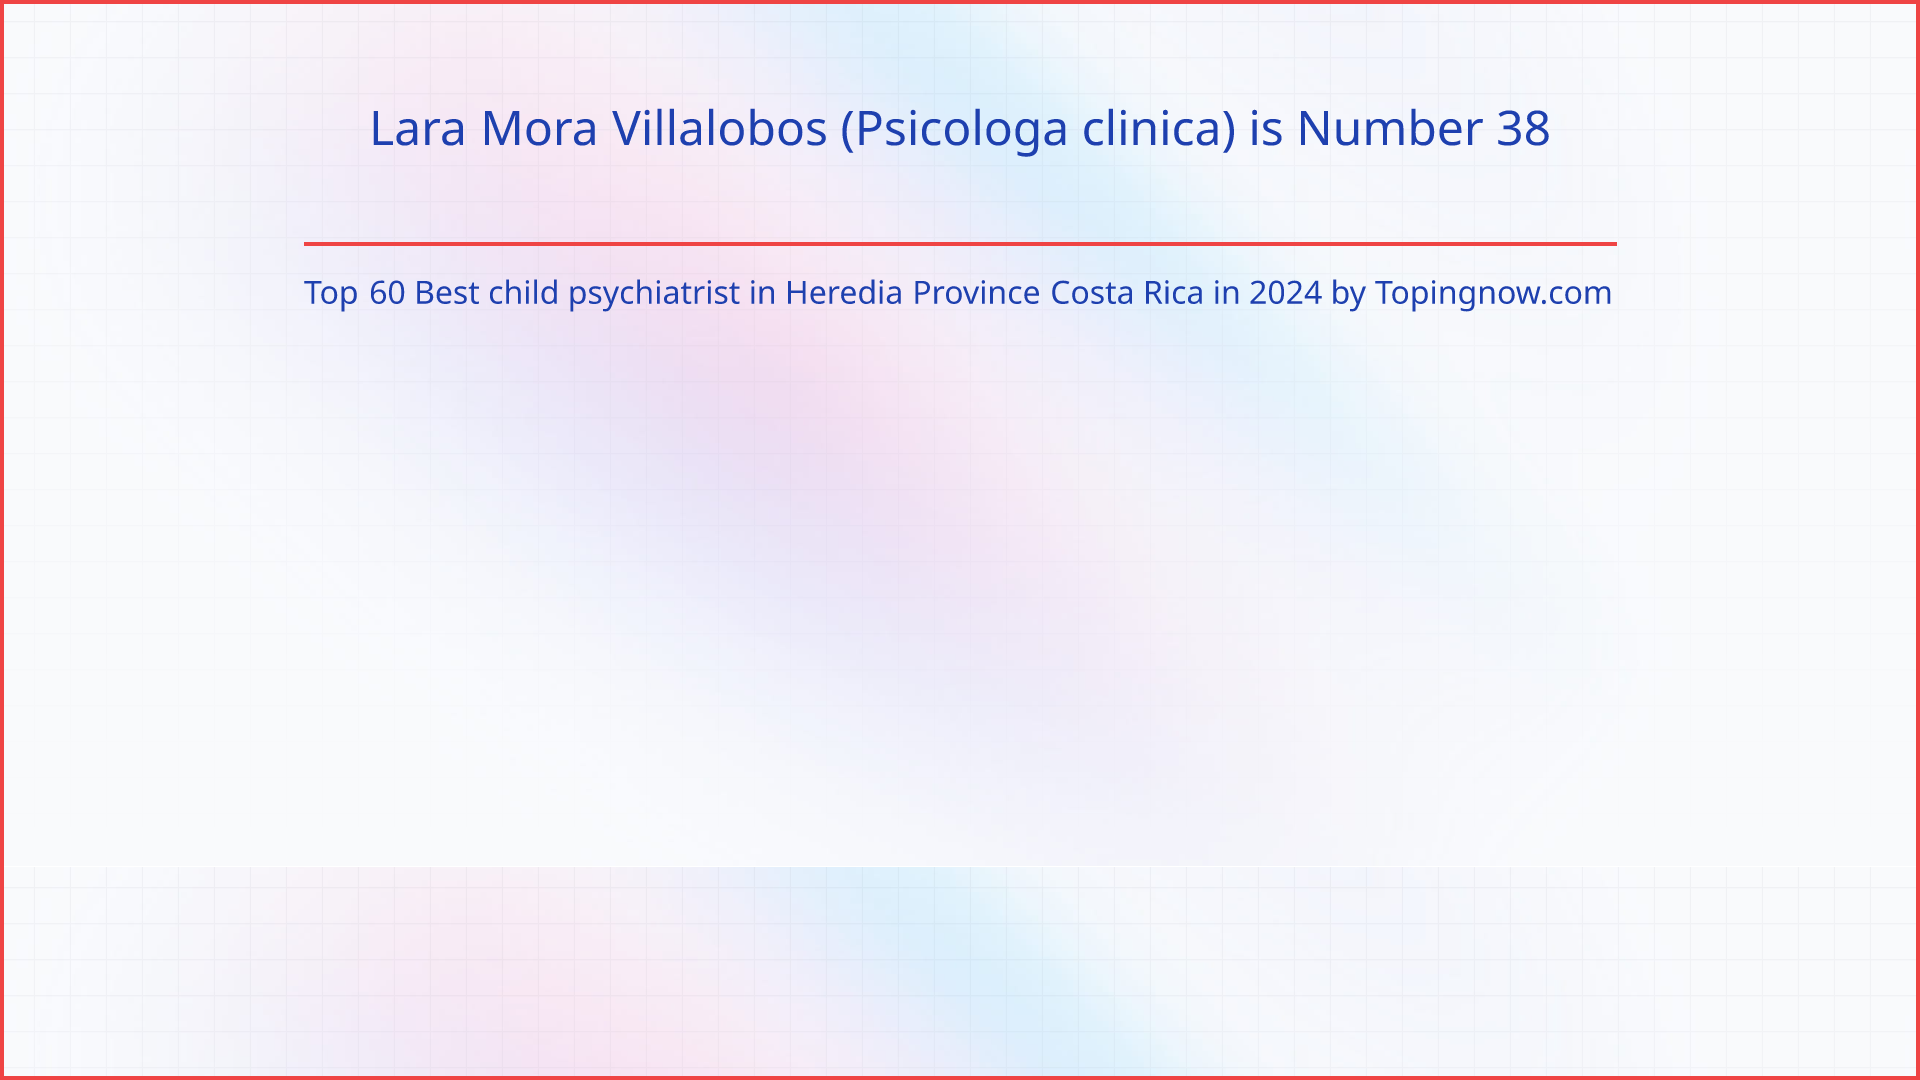 Lara Mora Villalobos (Psicologa clinica): Top 60 Best child psychiatrist in Heredia Province Costa Rica in 2024